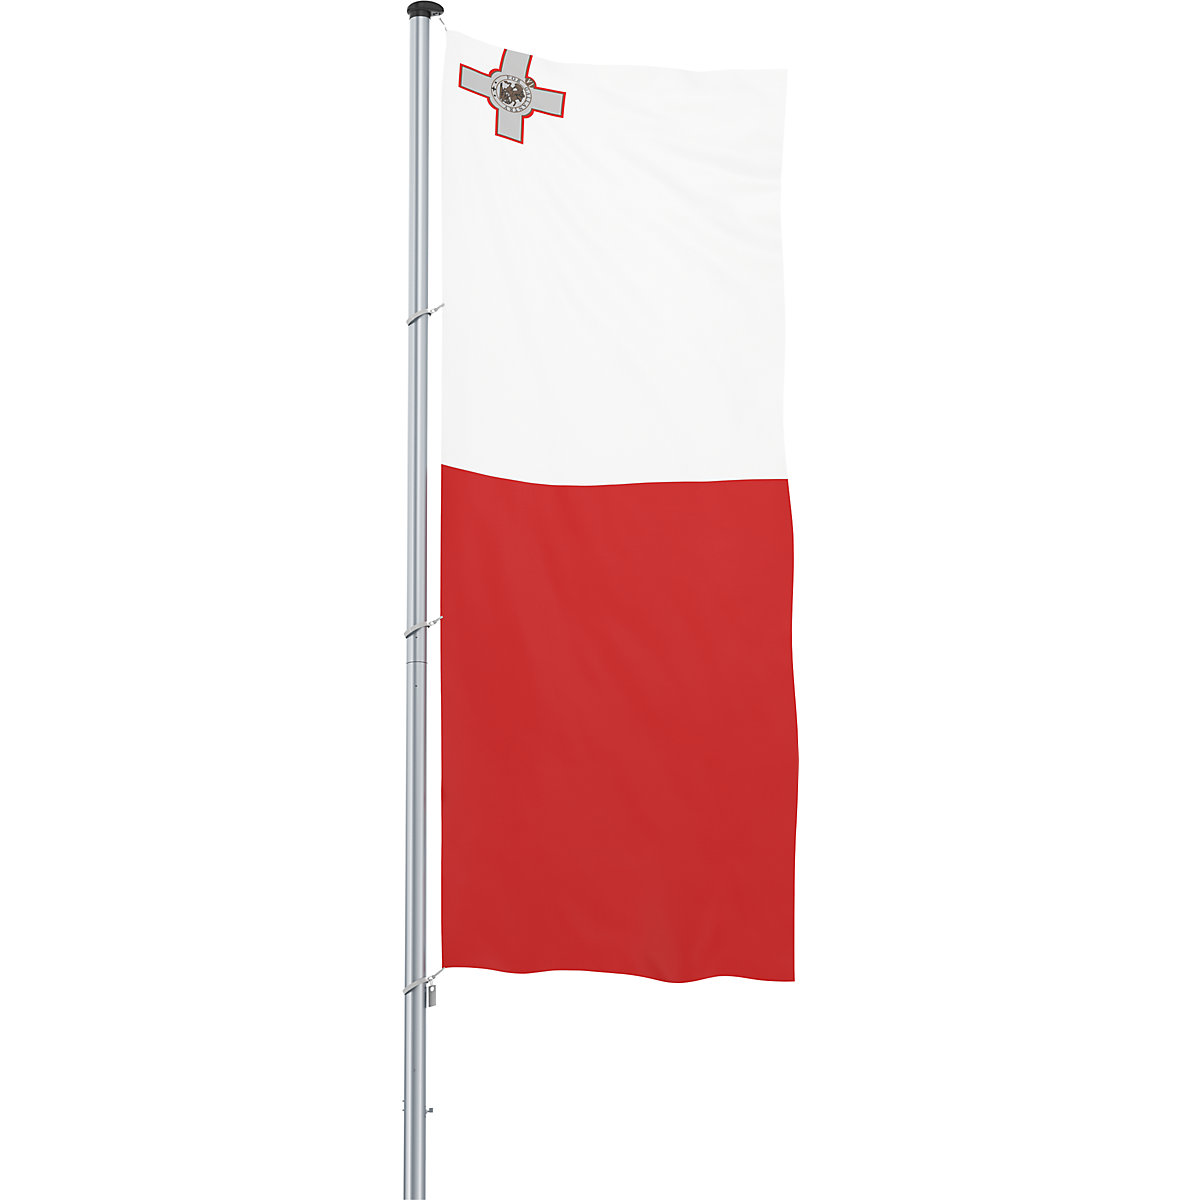 Mannus – Bandera para izar/bandera del país, formato 1,2 x 3 m, Malta